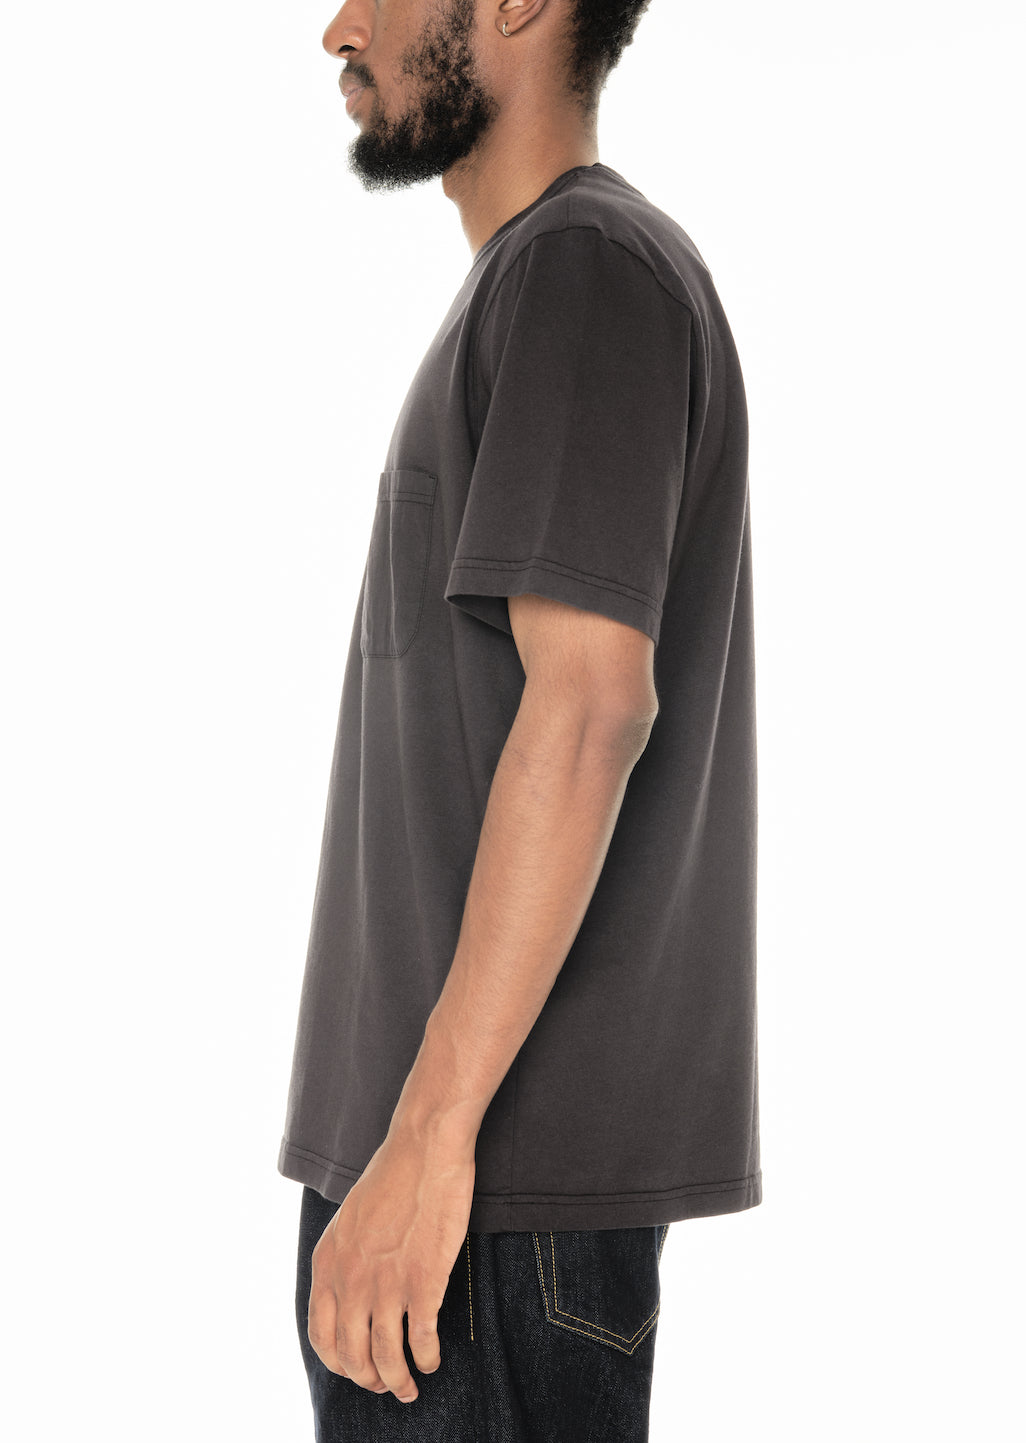 Woven Pocket T-Shirt in Black